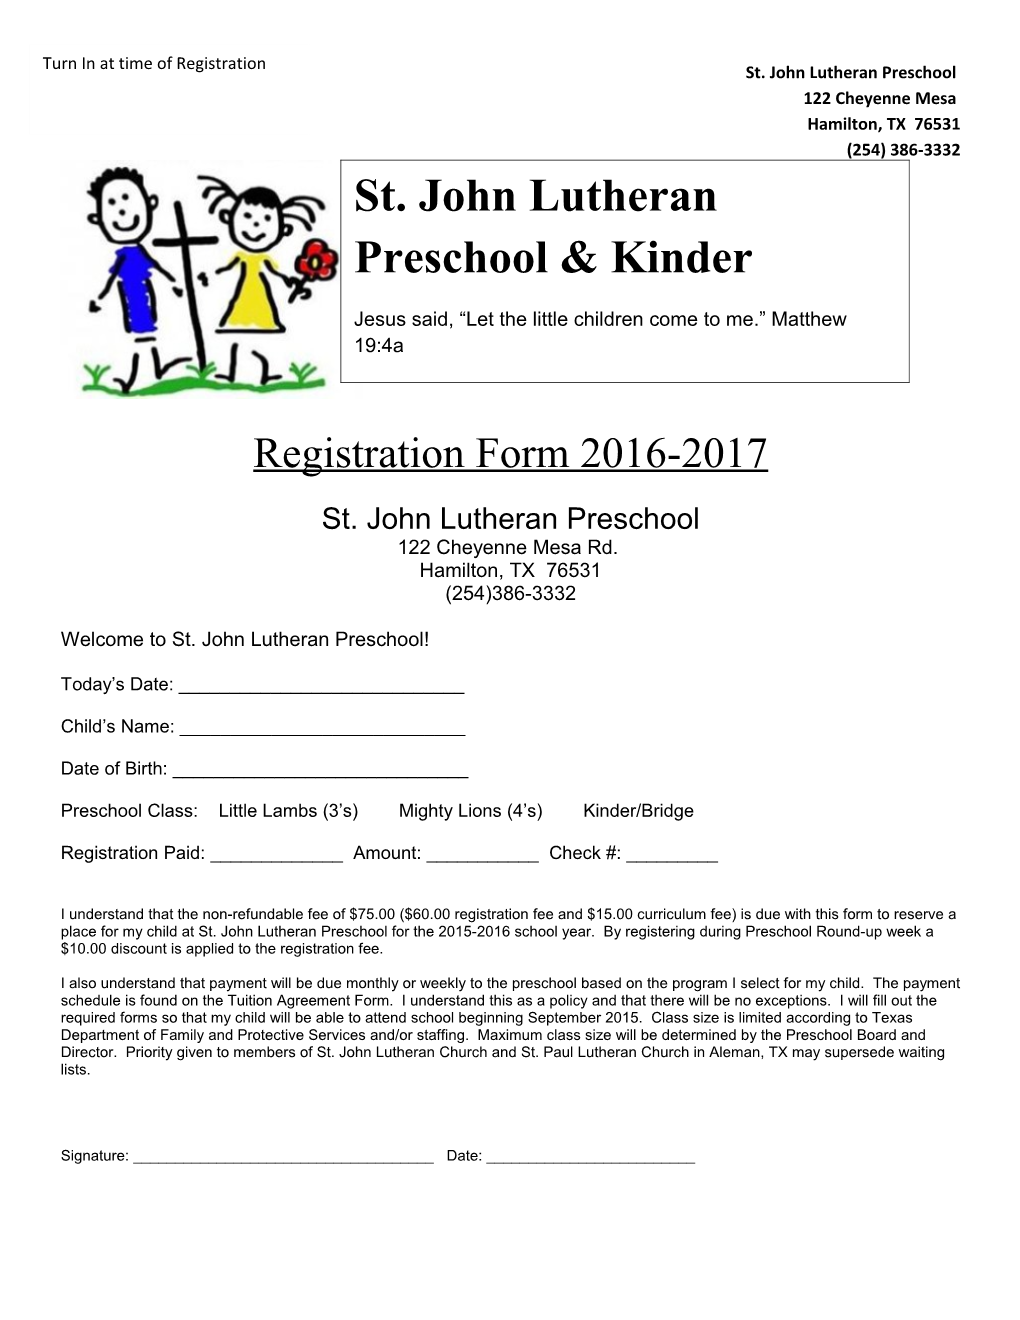 St. John Lutheran Preschool